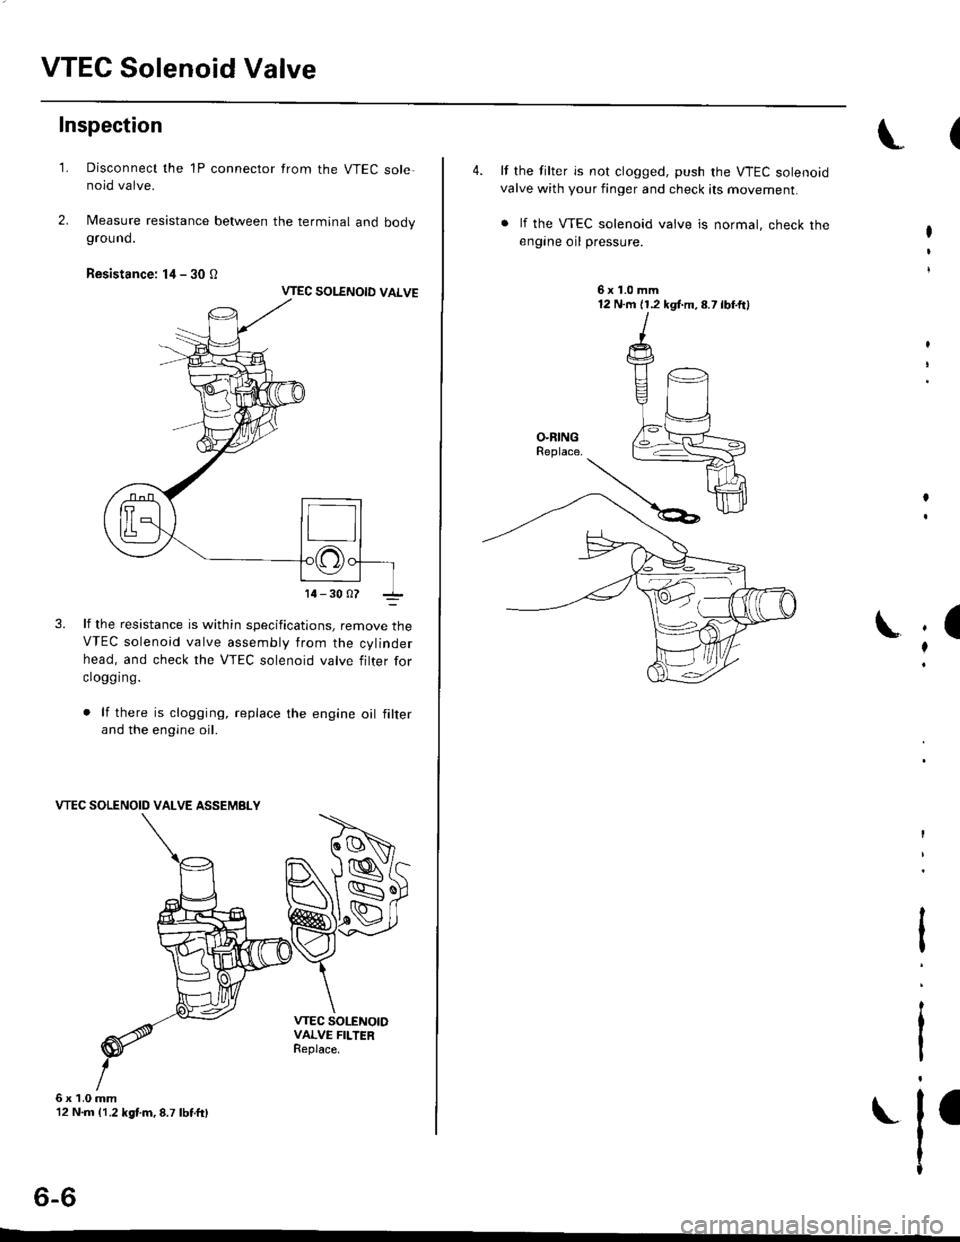 HONDA CIVIC 1999 6.G Workshop Manual VTEC Solenoid Valve
Inspection
1.
6x1.0mm12 N.m 11.2 kgf.m,8.7 lbtft)
Disconnect the 1P connector from the VTEC sole-noid valve.
Measure resistance between the terminal and bodyground.
Resistance: l4 